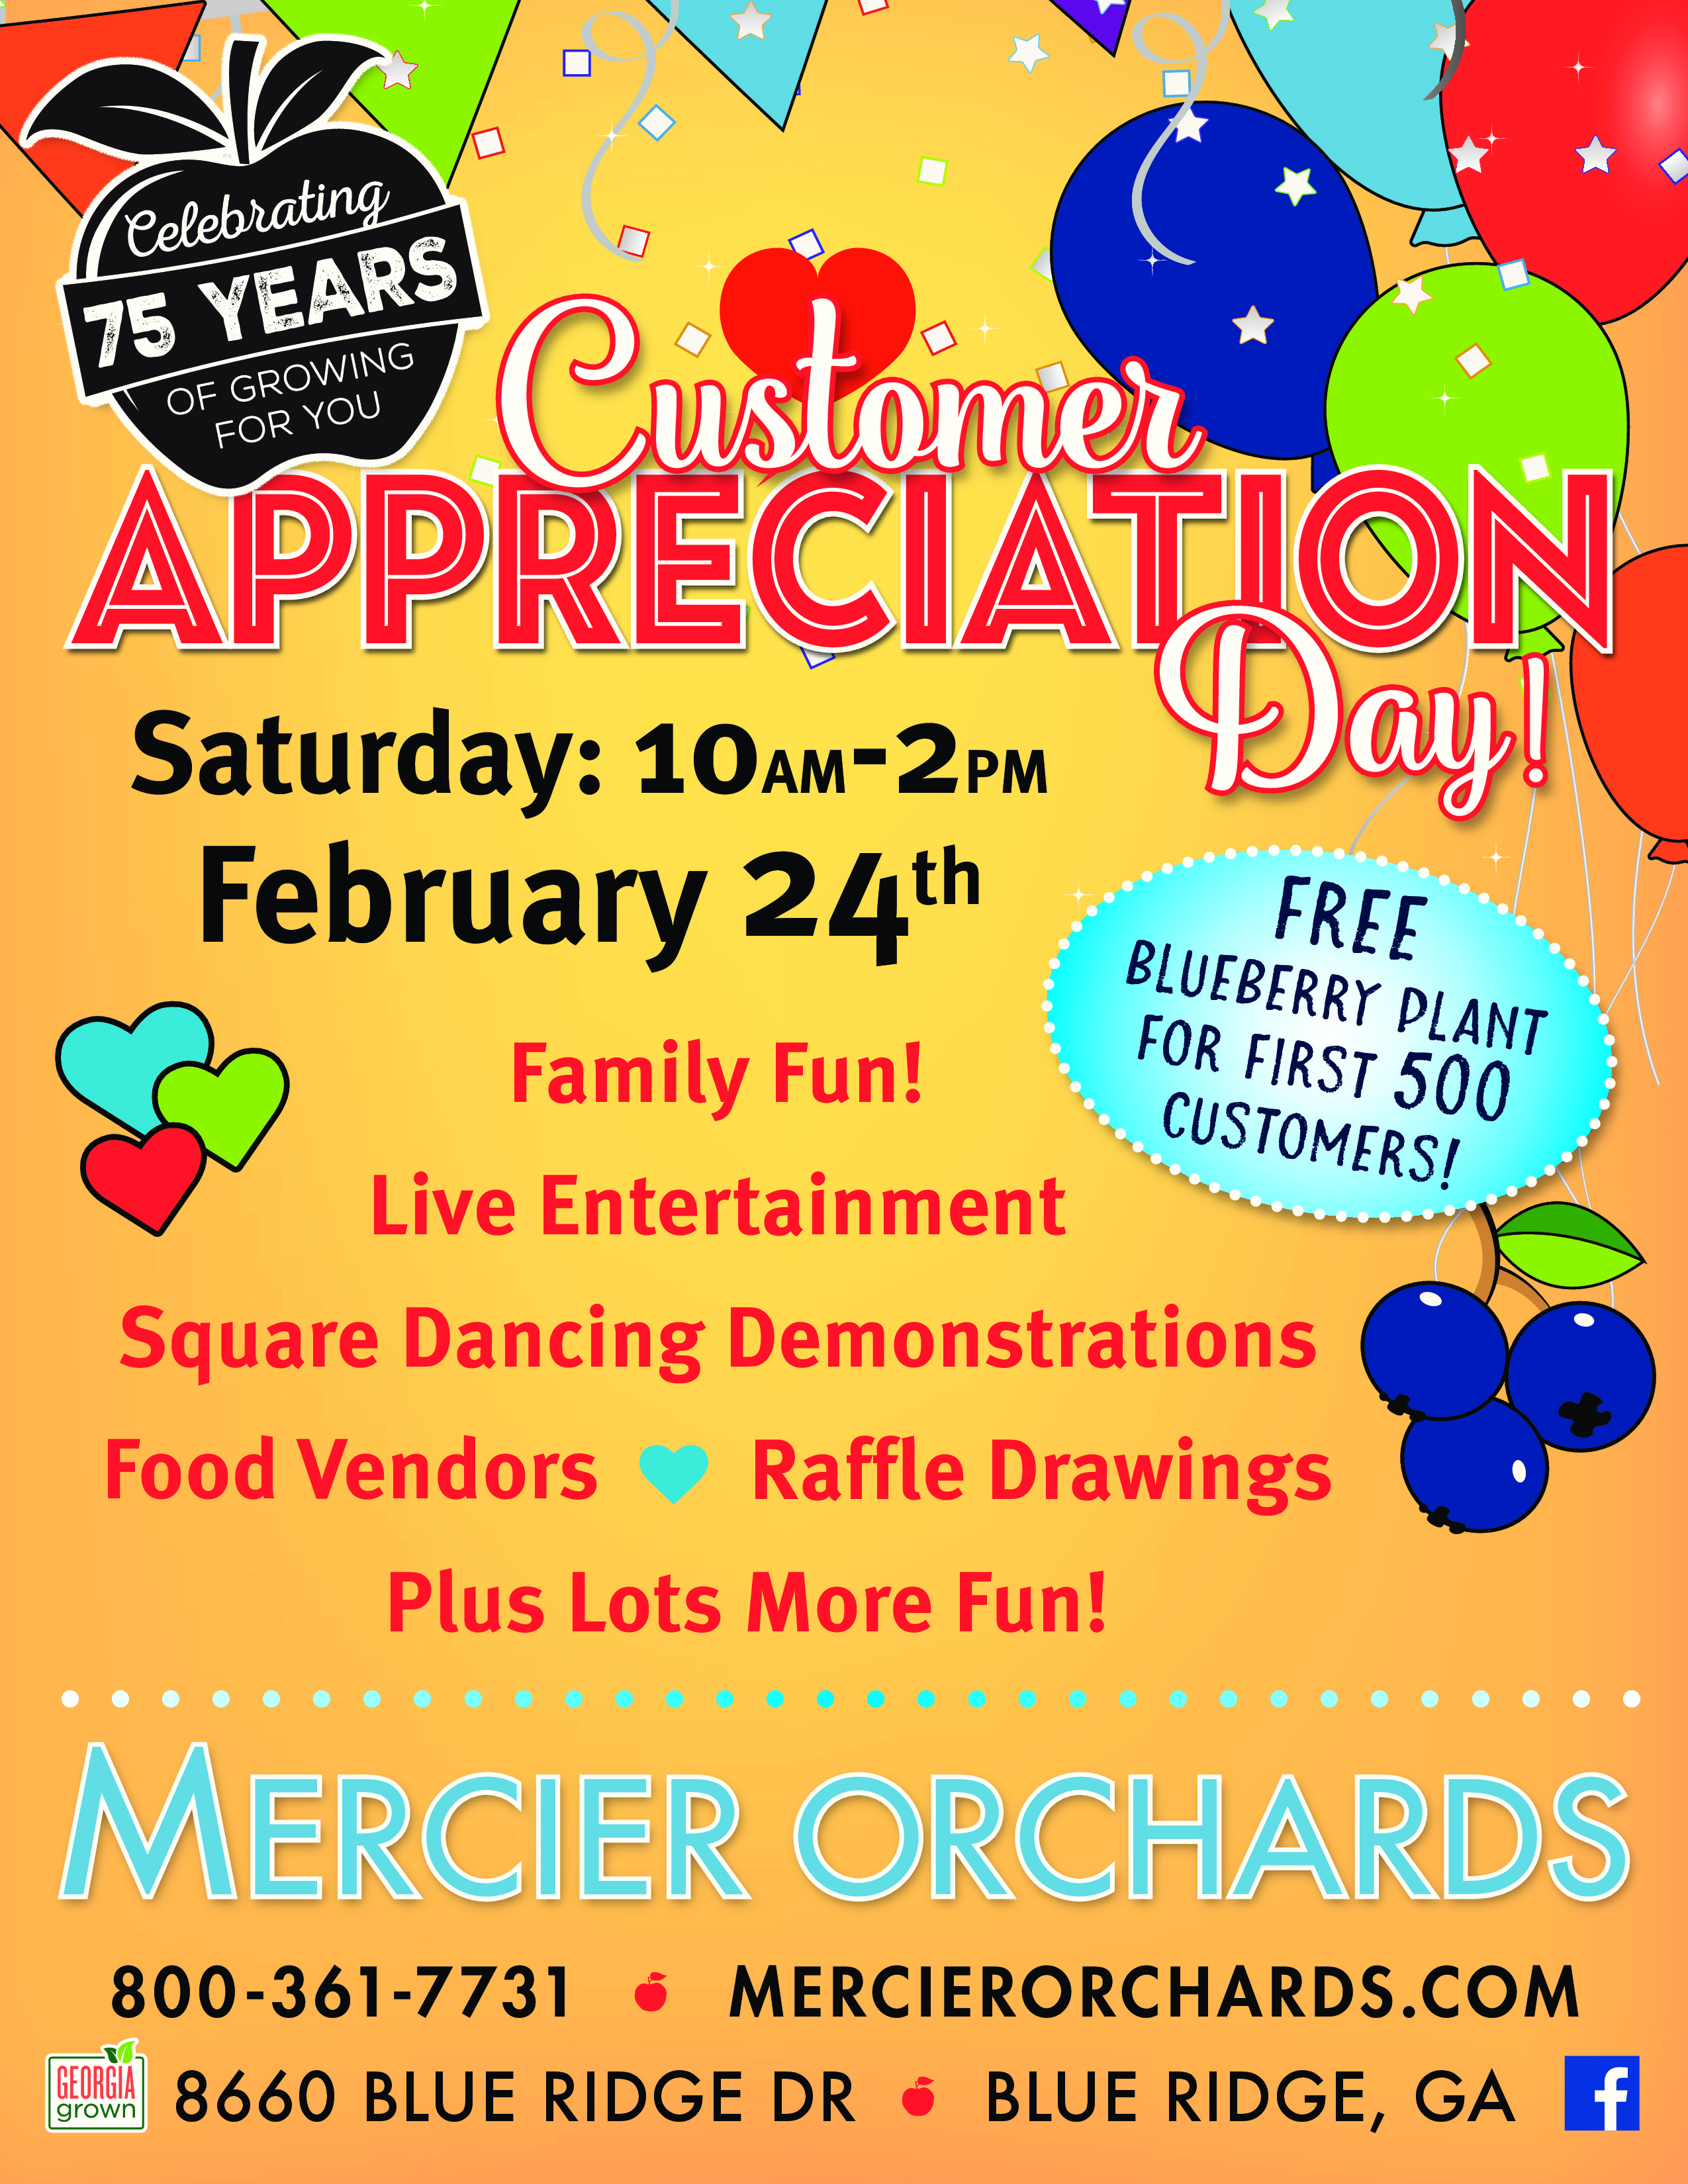 customer-appreciation-day-is-tomorrow-sat-2-24-mercier-orchards-online